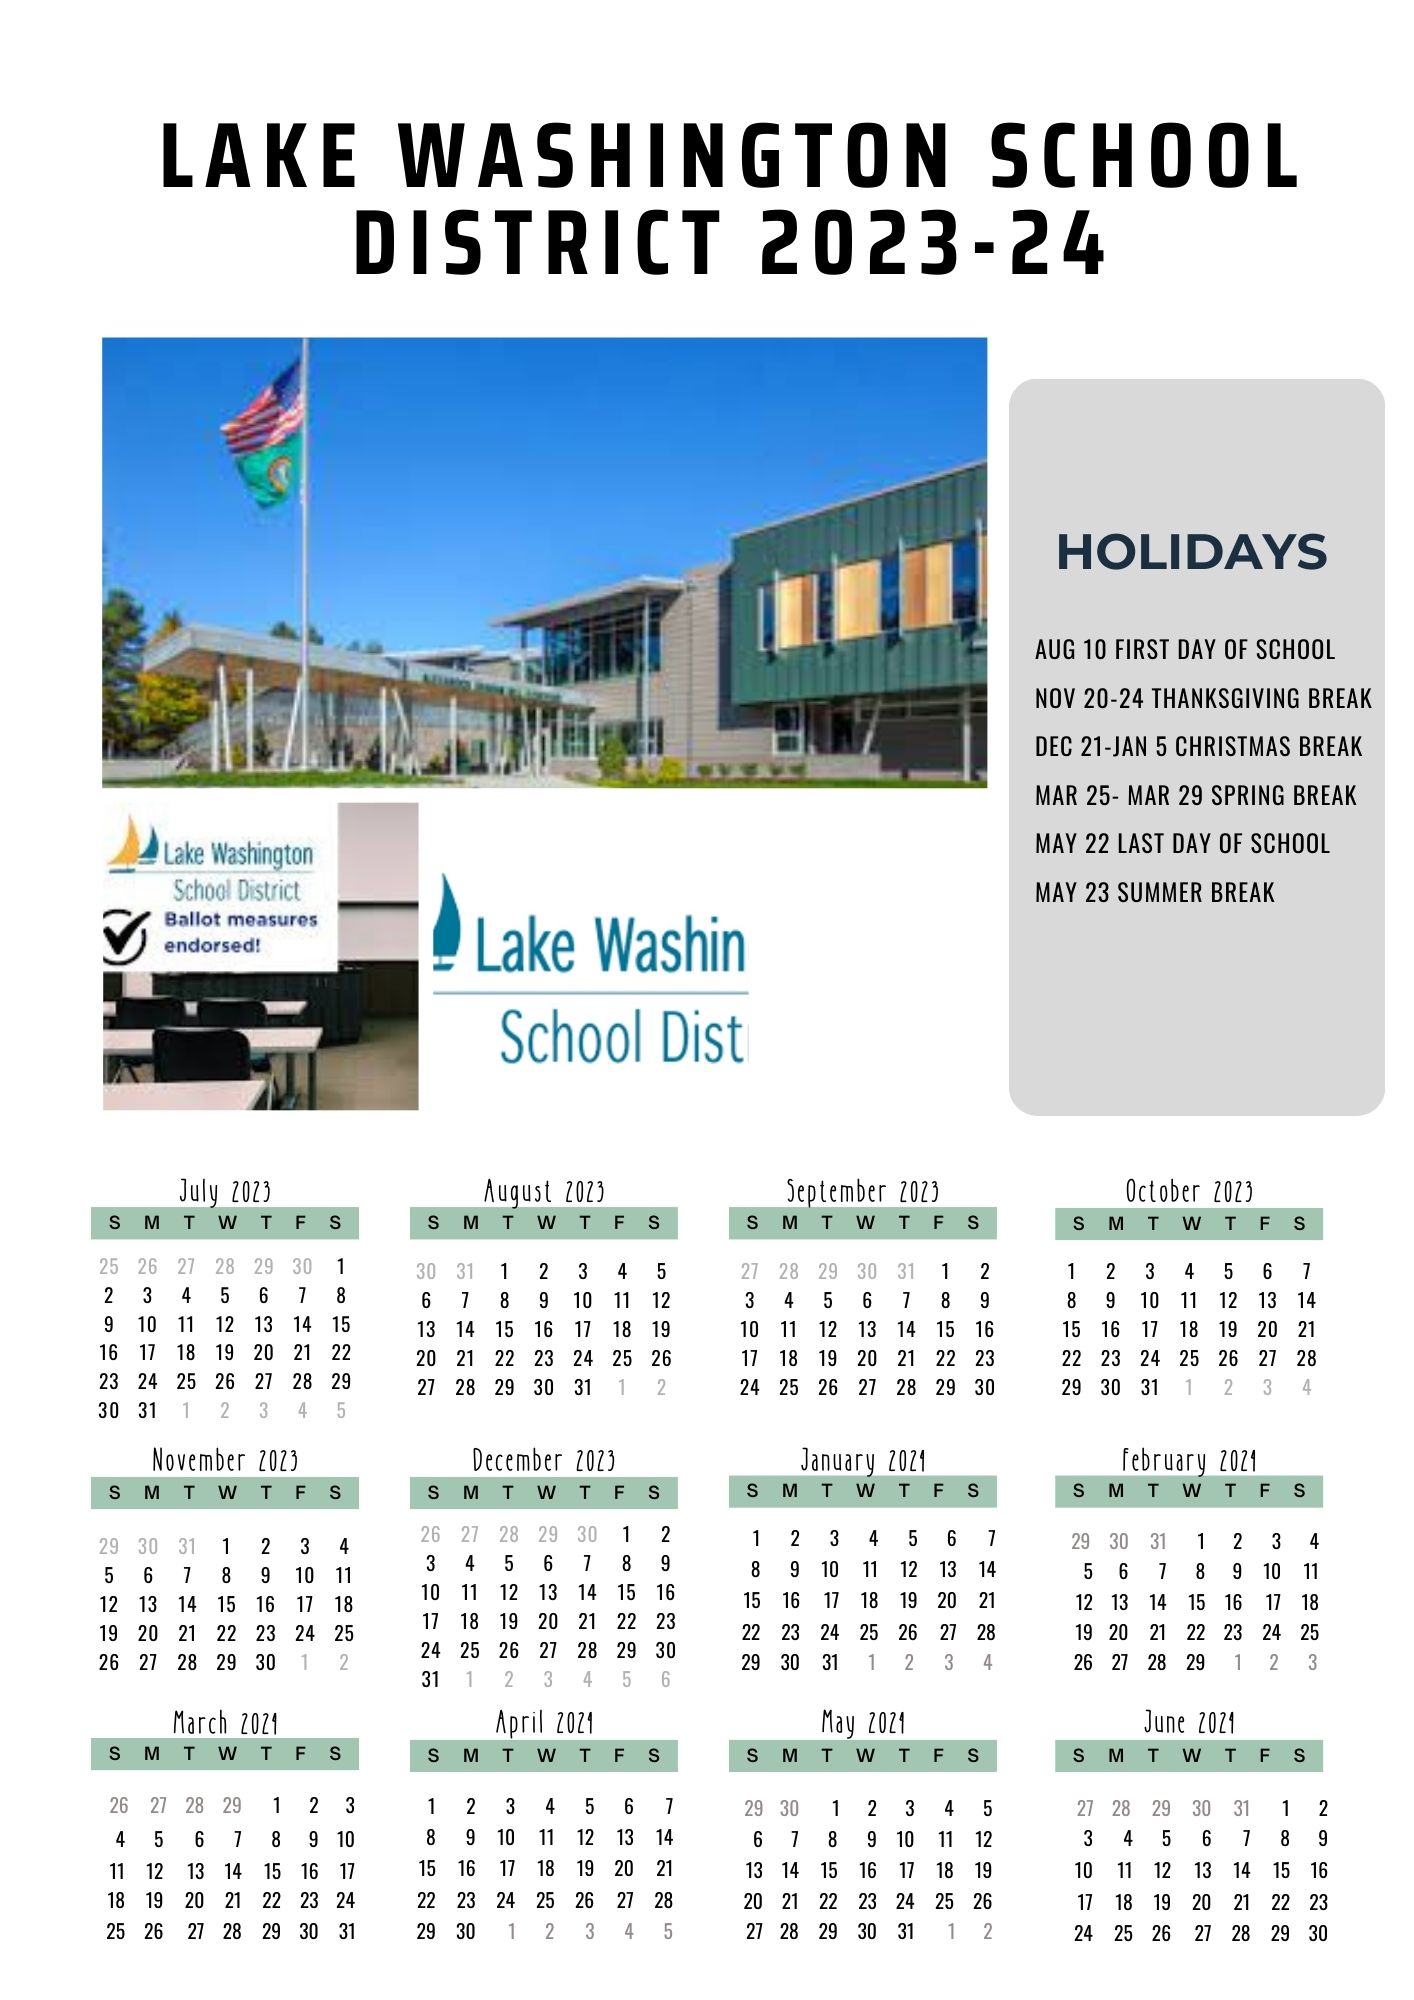 Lake Washington School District Calendar Holidays 2023-2024